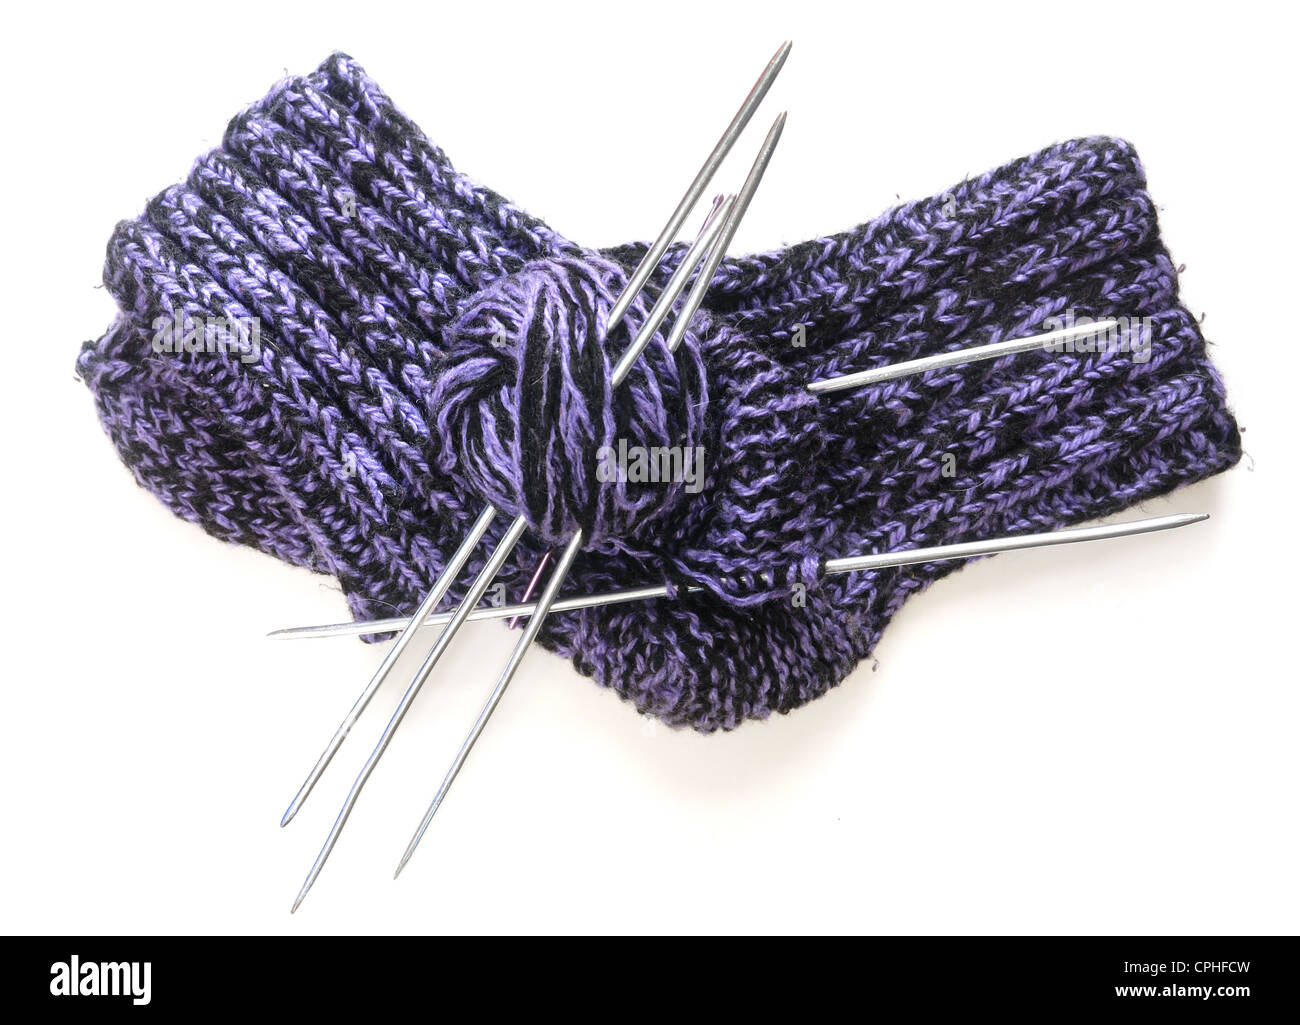 Wool knitted socks, yarn and knitting needles Stock Photo